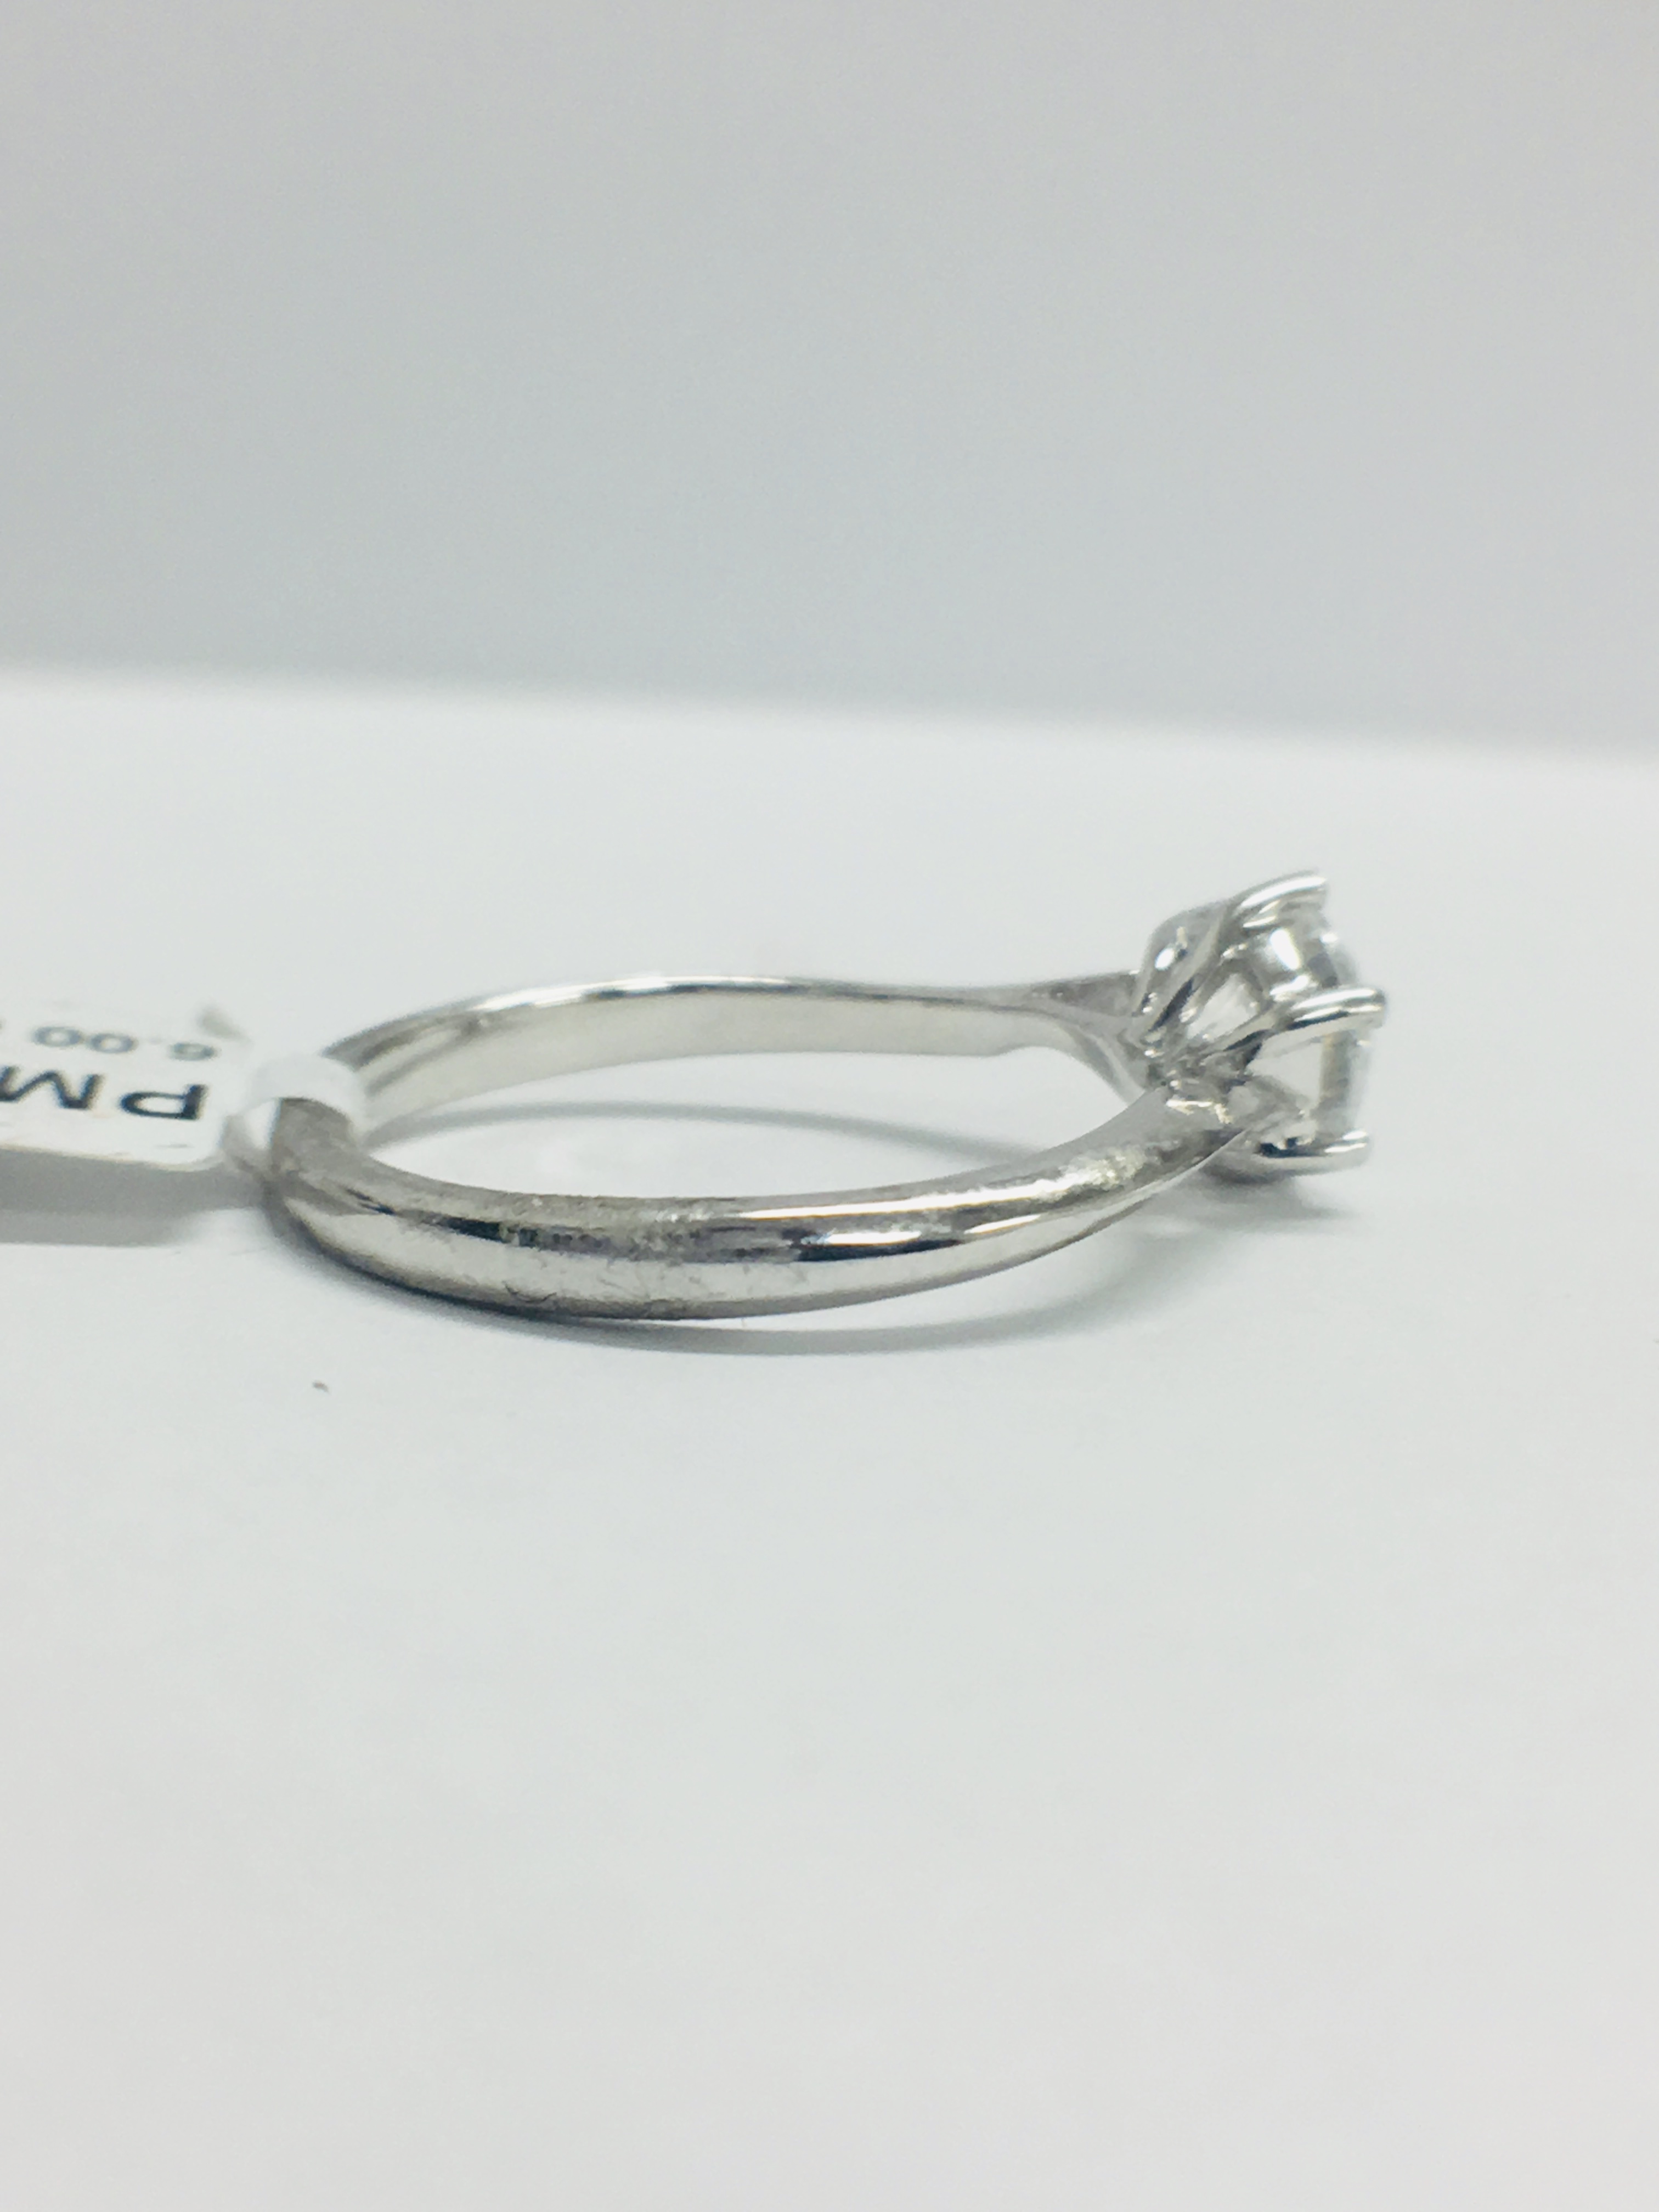 Platinum Solitaire 4 Claw Diamond Ring, - Image 6 of 8